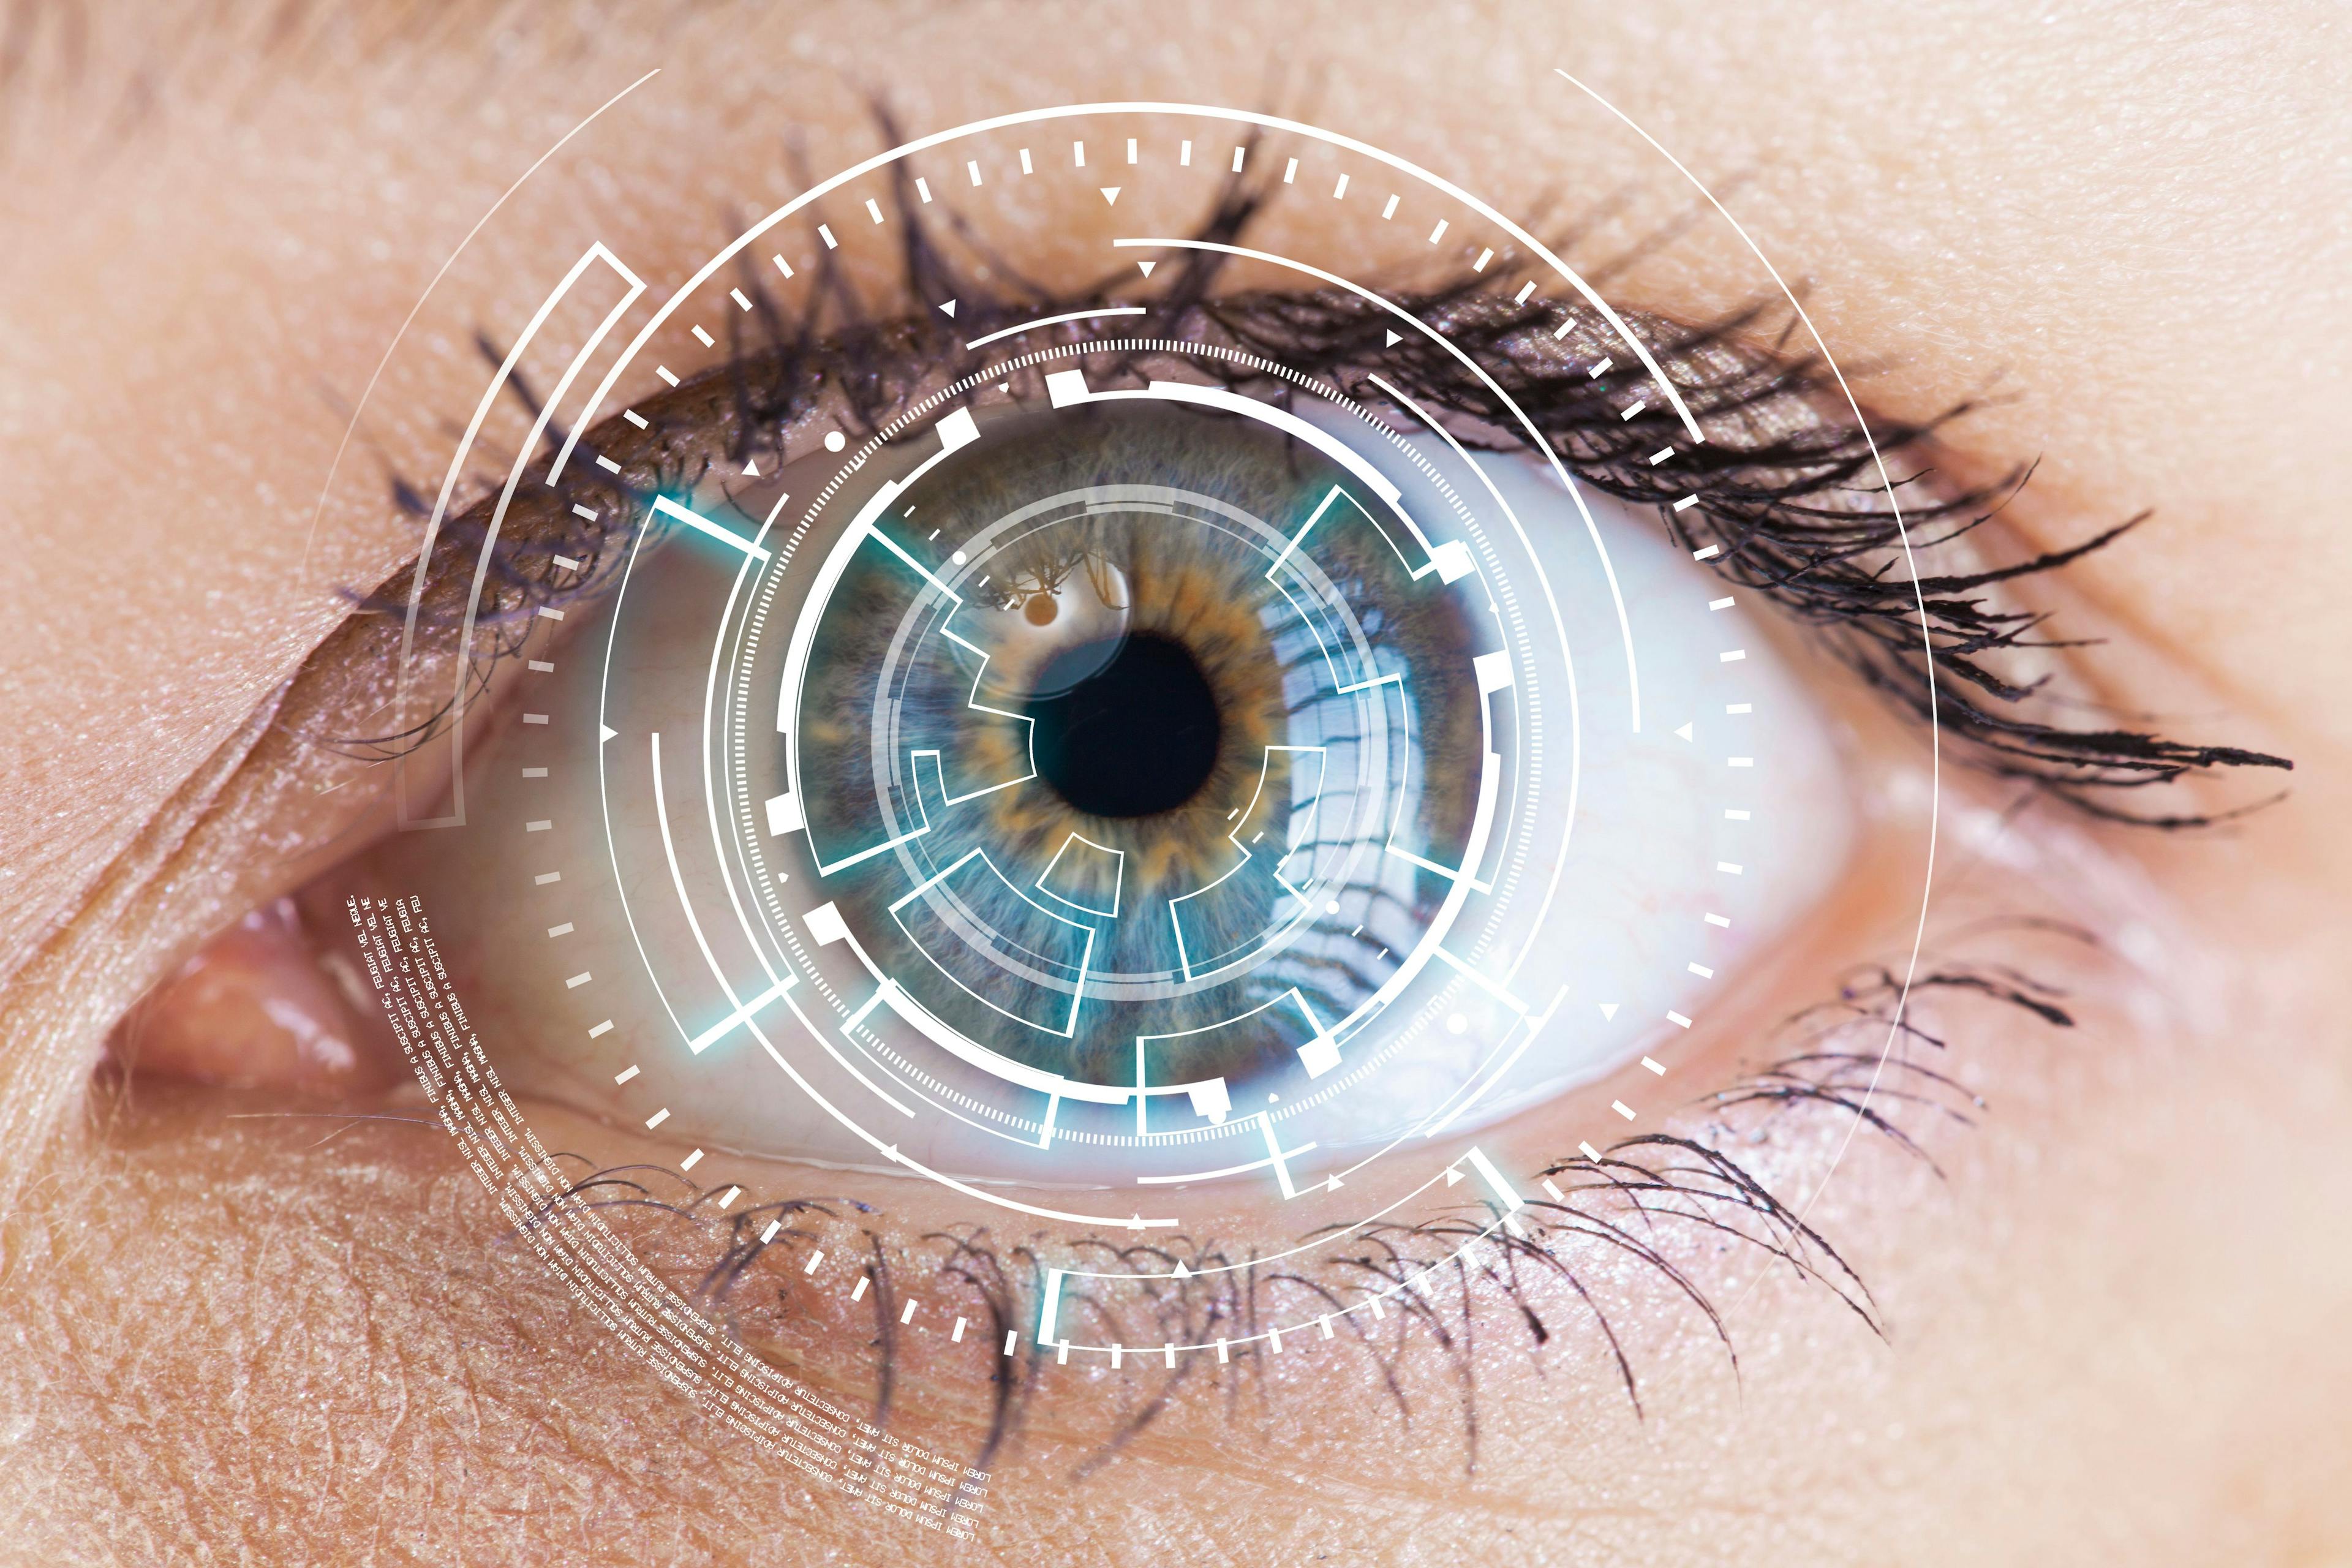 Eye viewing digital information | Image Credit: dragonstock - stock.adobe.com